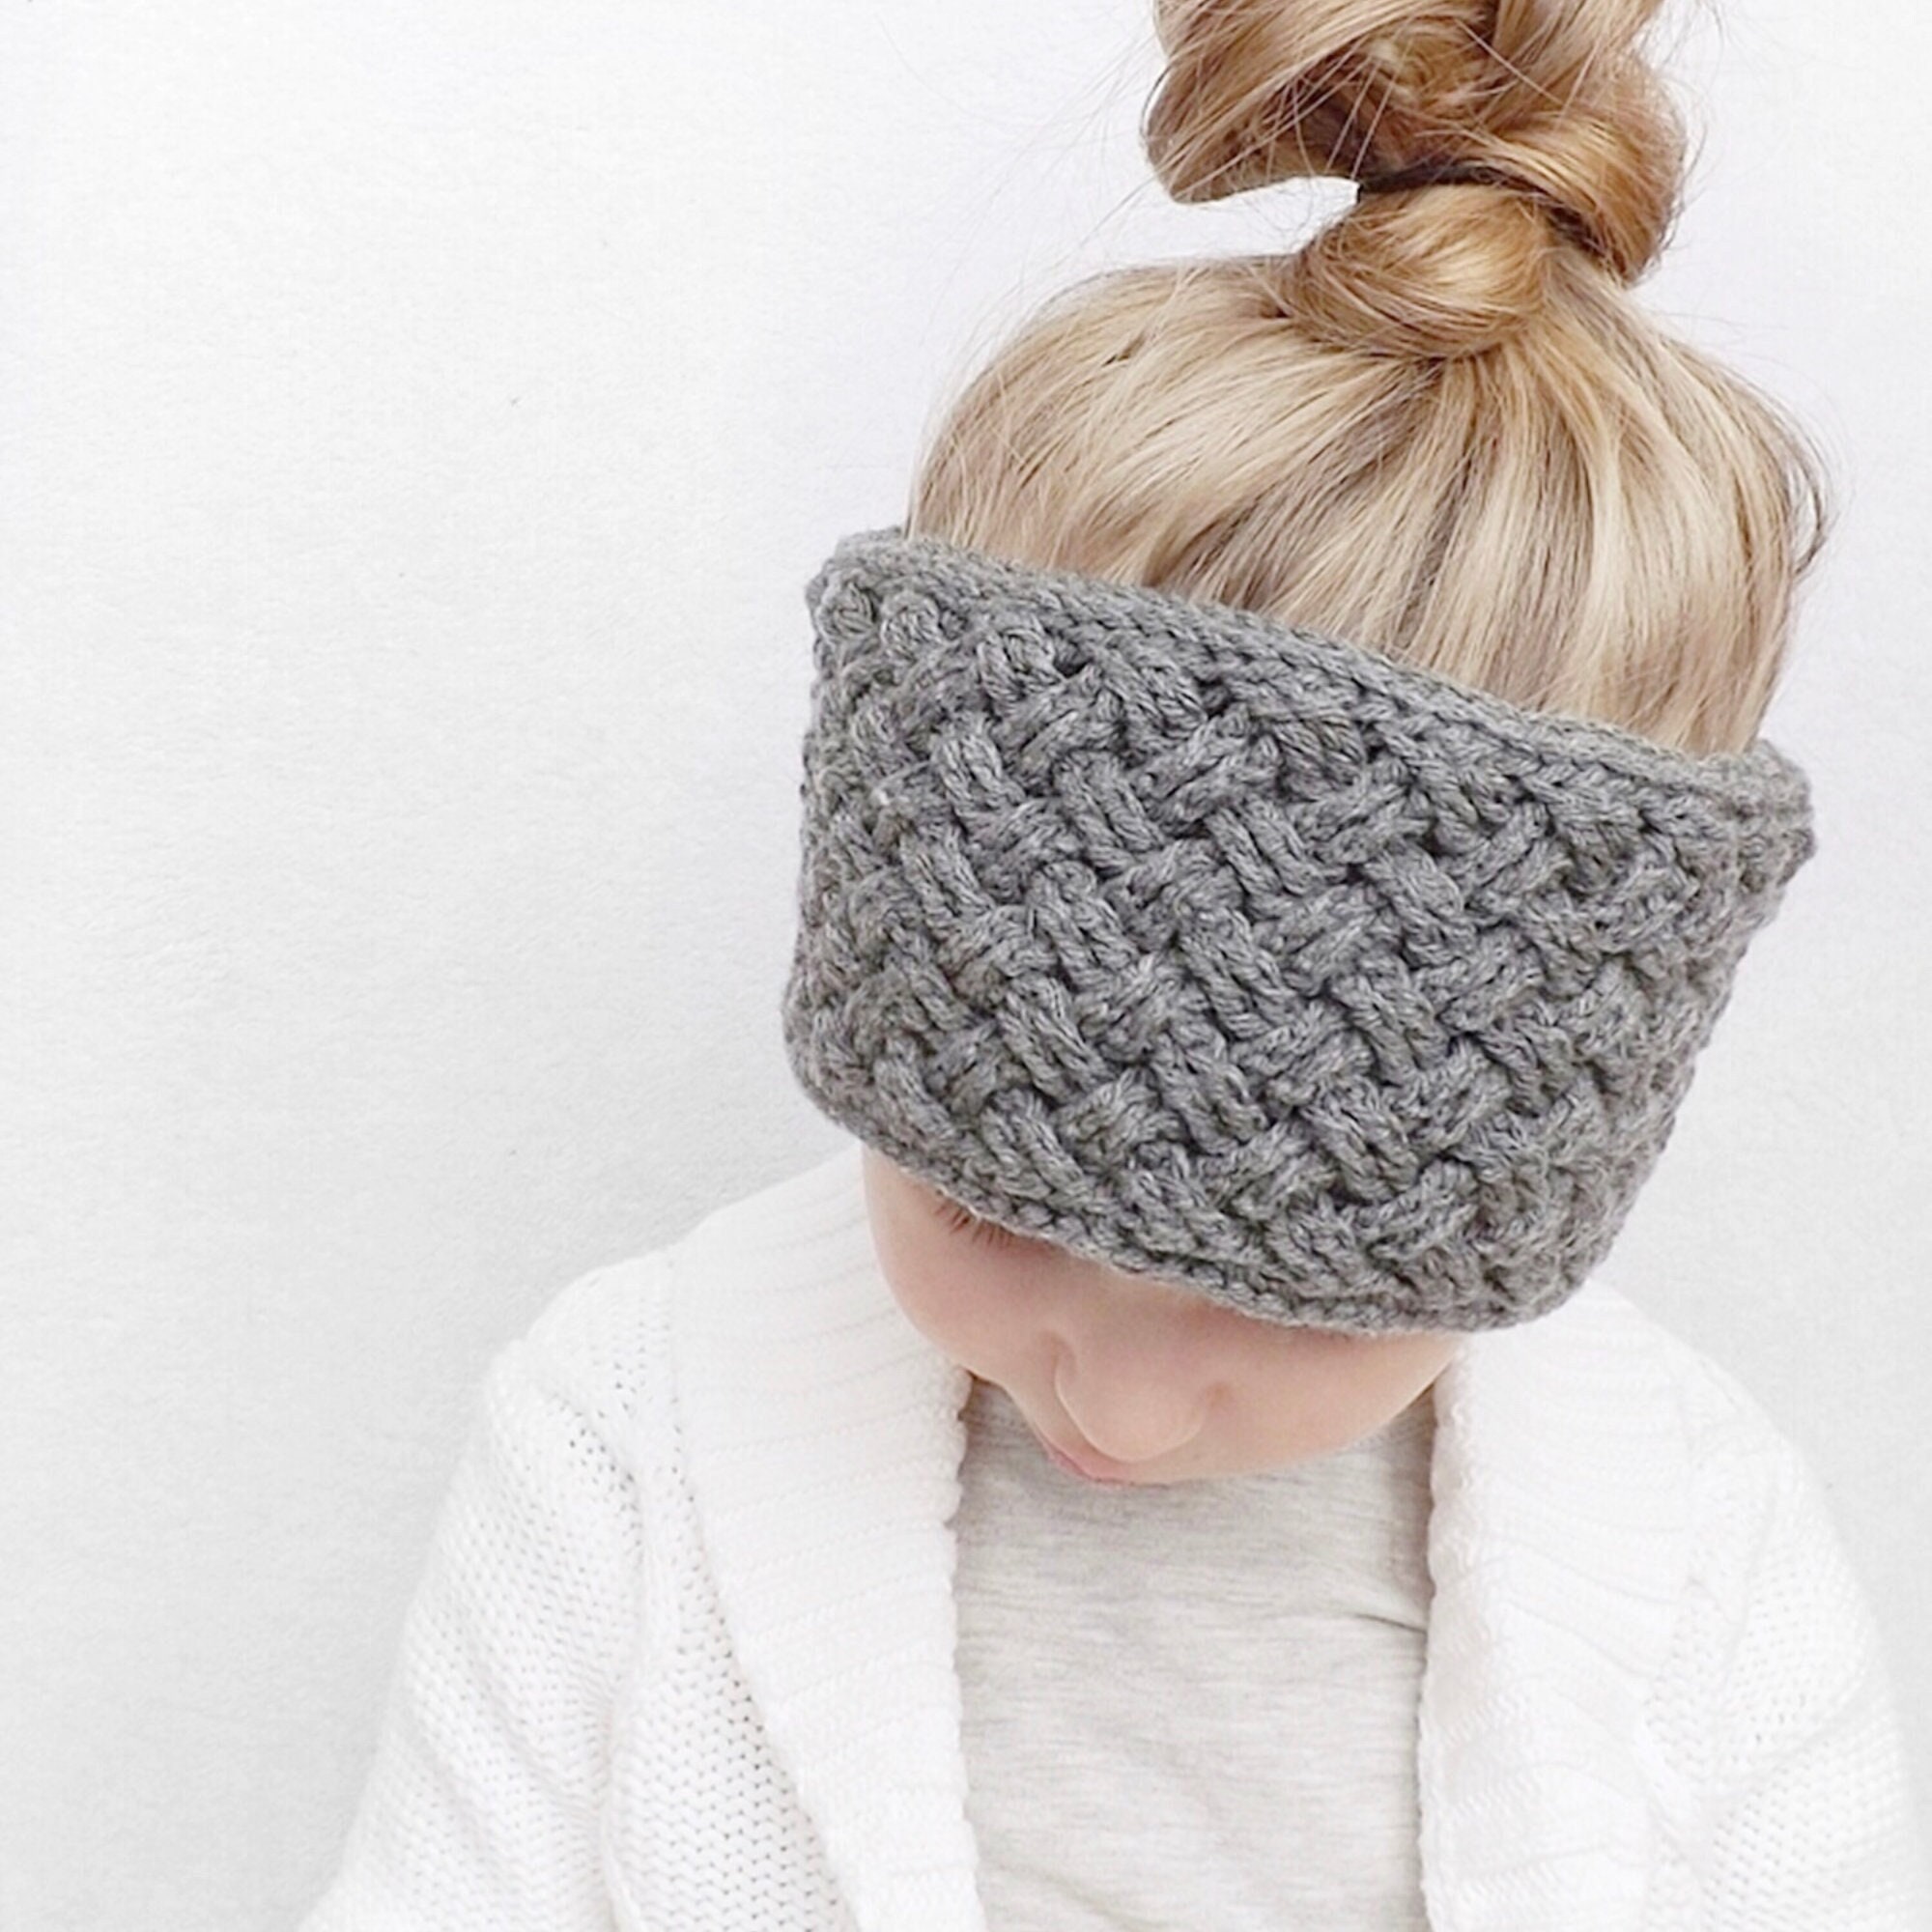 25 Free Headband and Ear Warmer Knitting Patterns - Sarah Maker